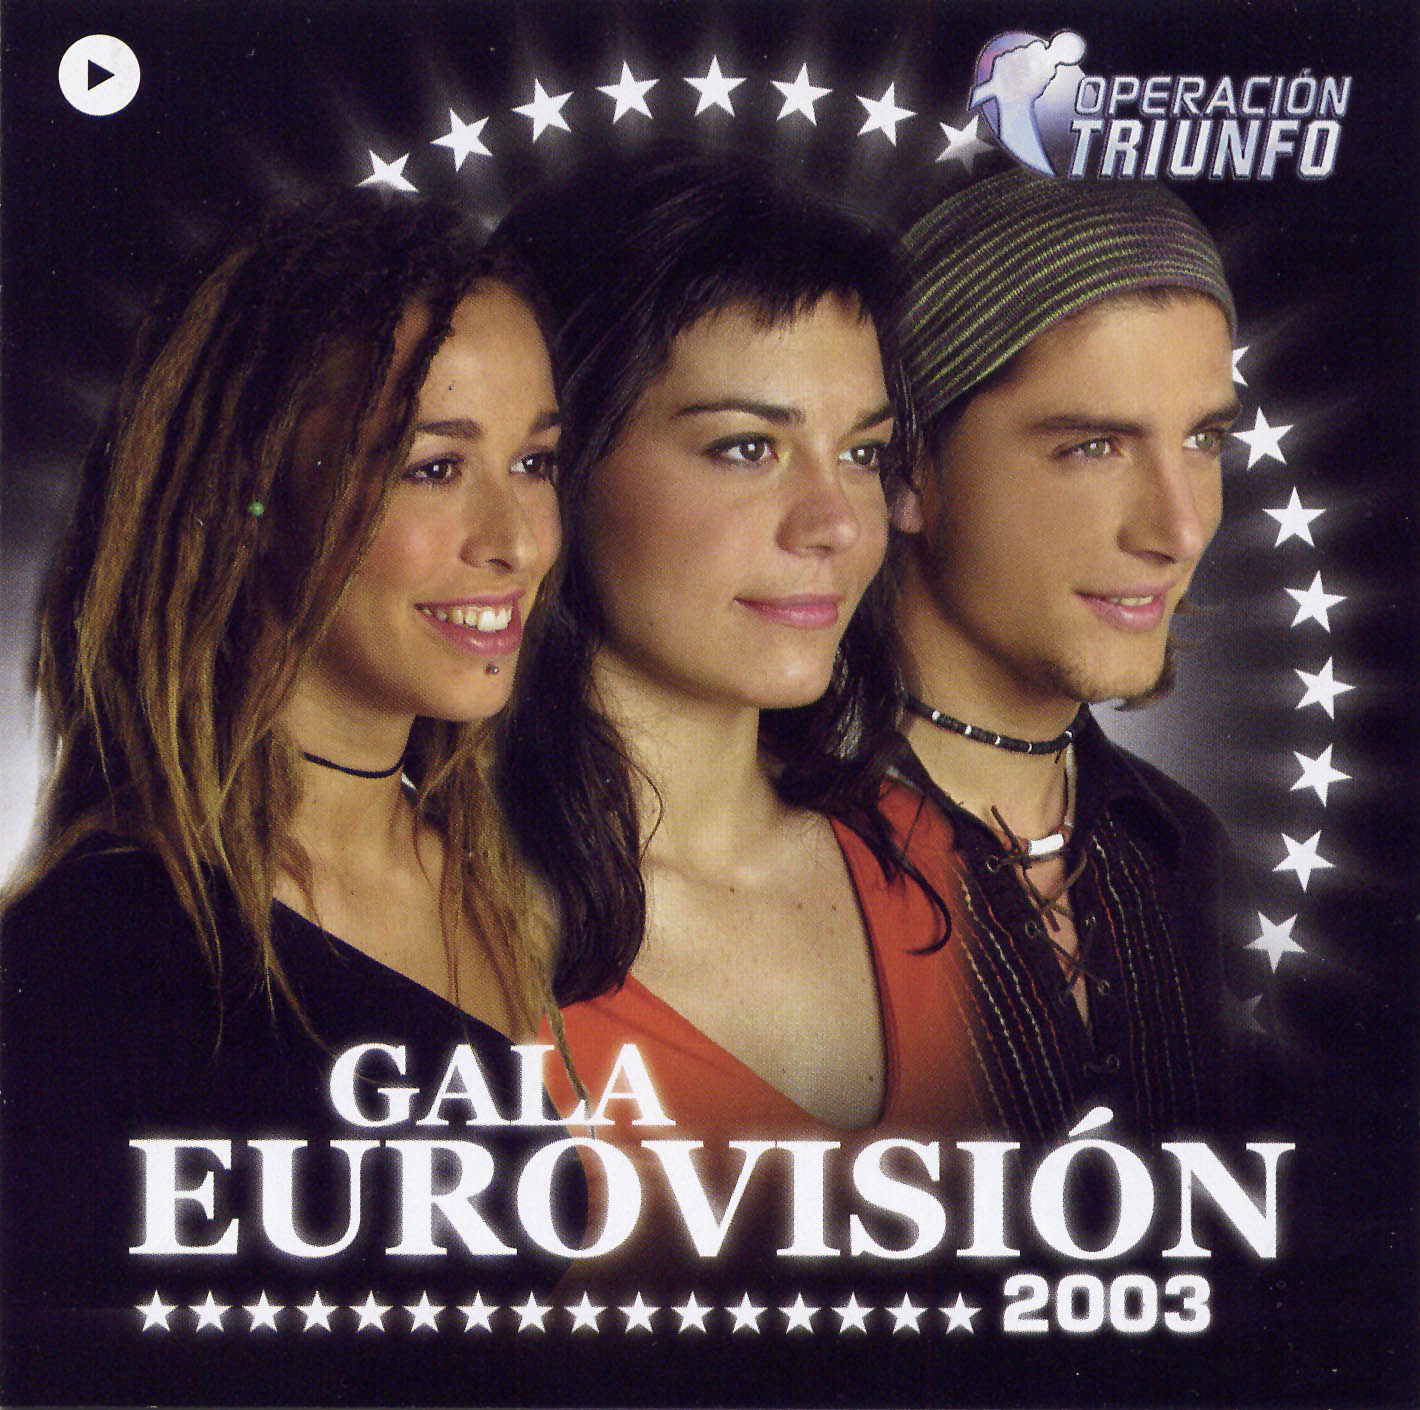 Cartula Frontal de Operacion Triunfo 2002-2003 Gala Eurovision